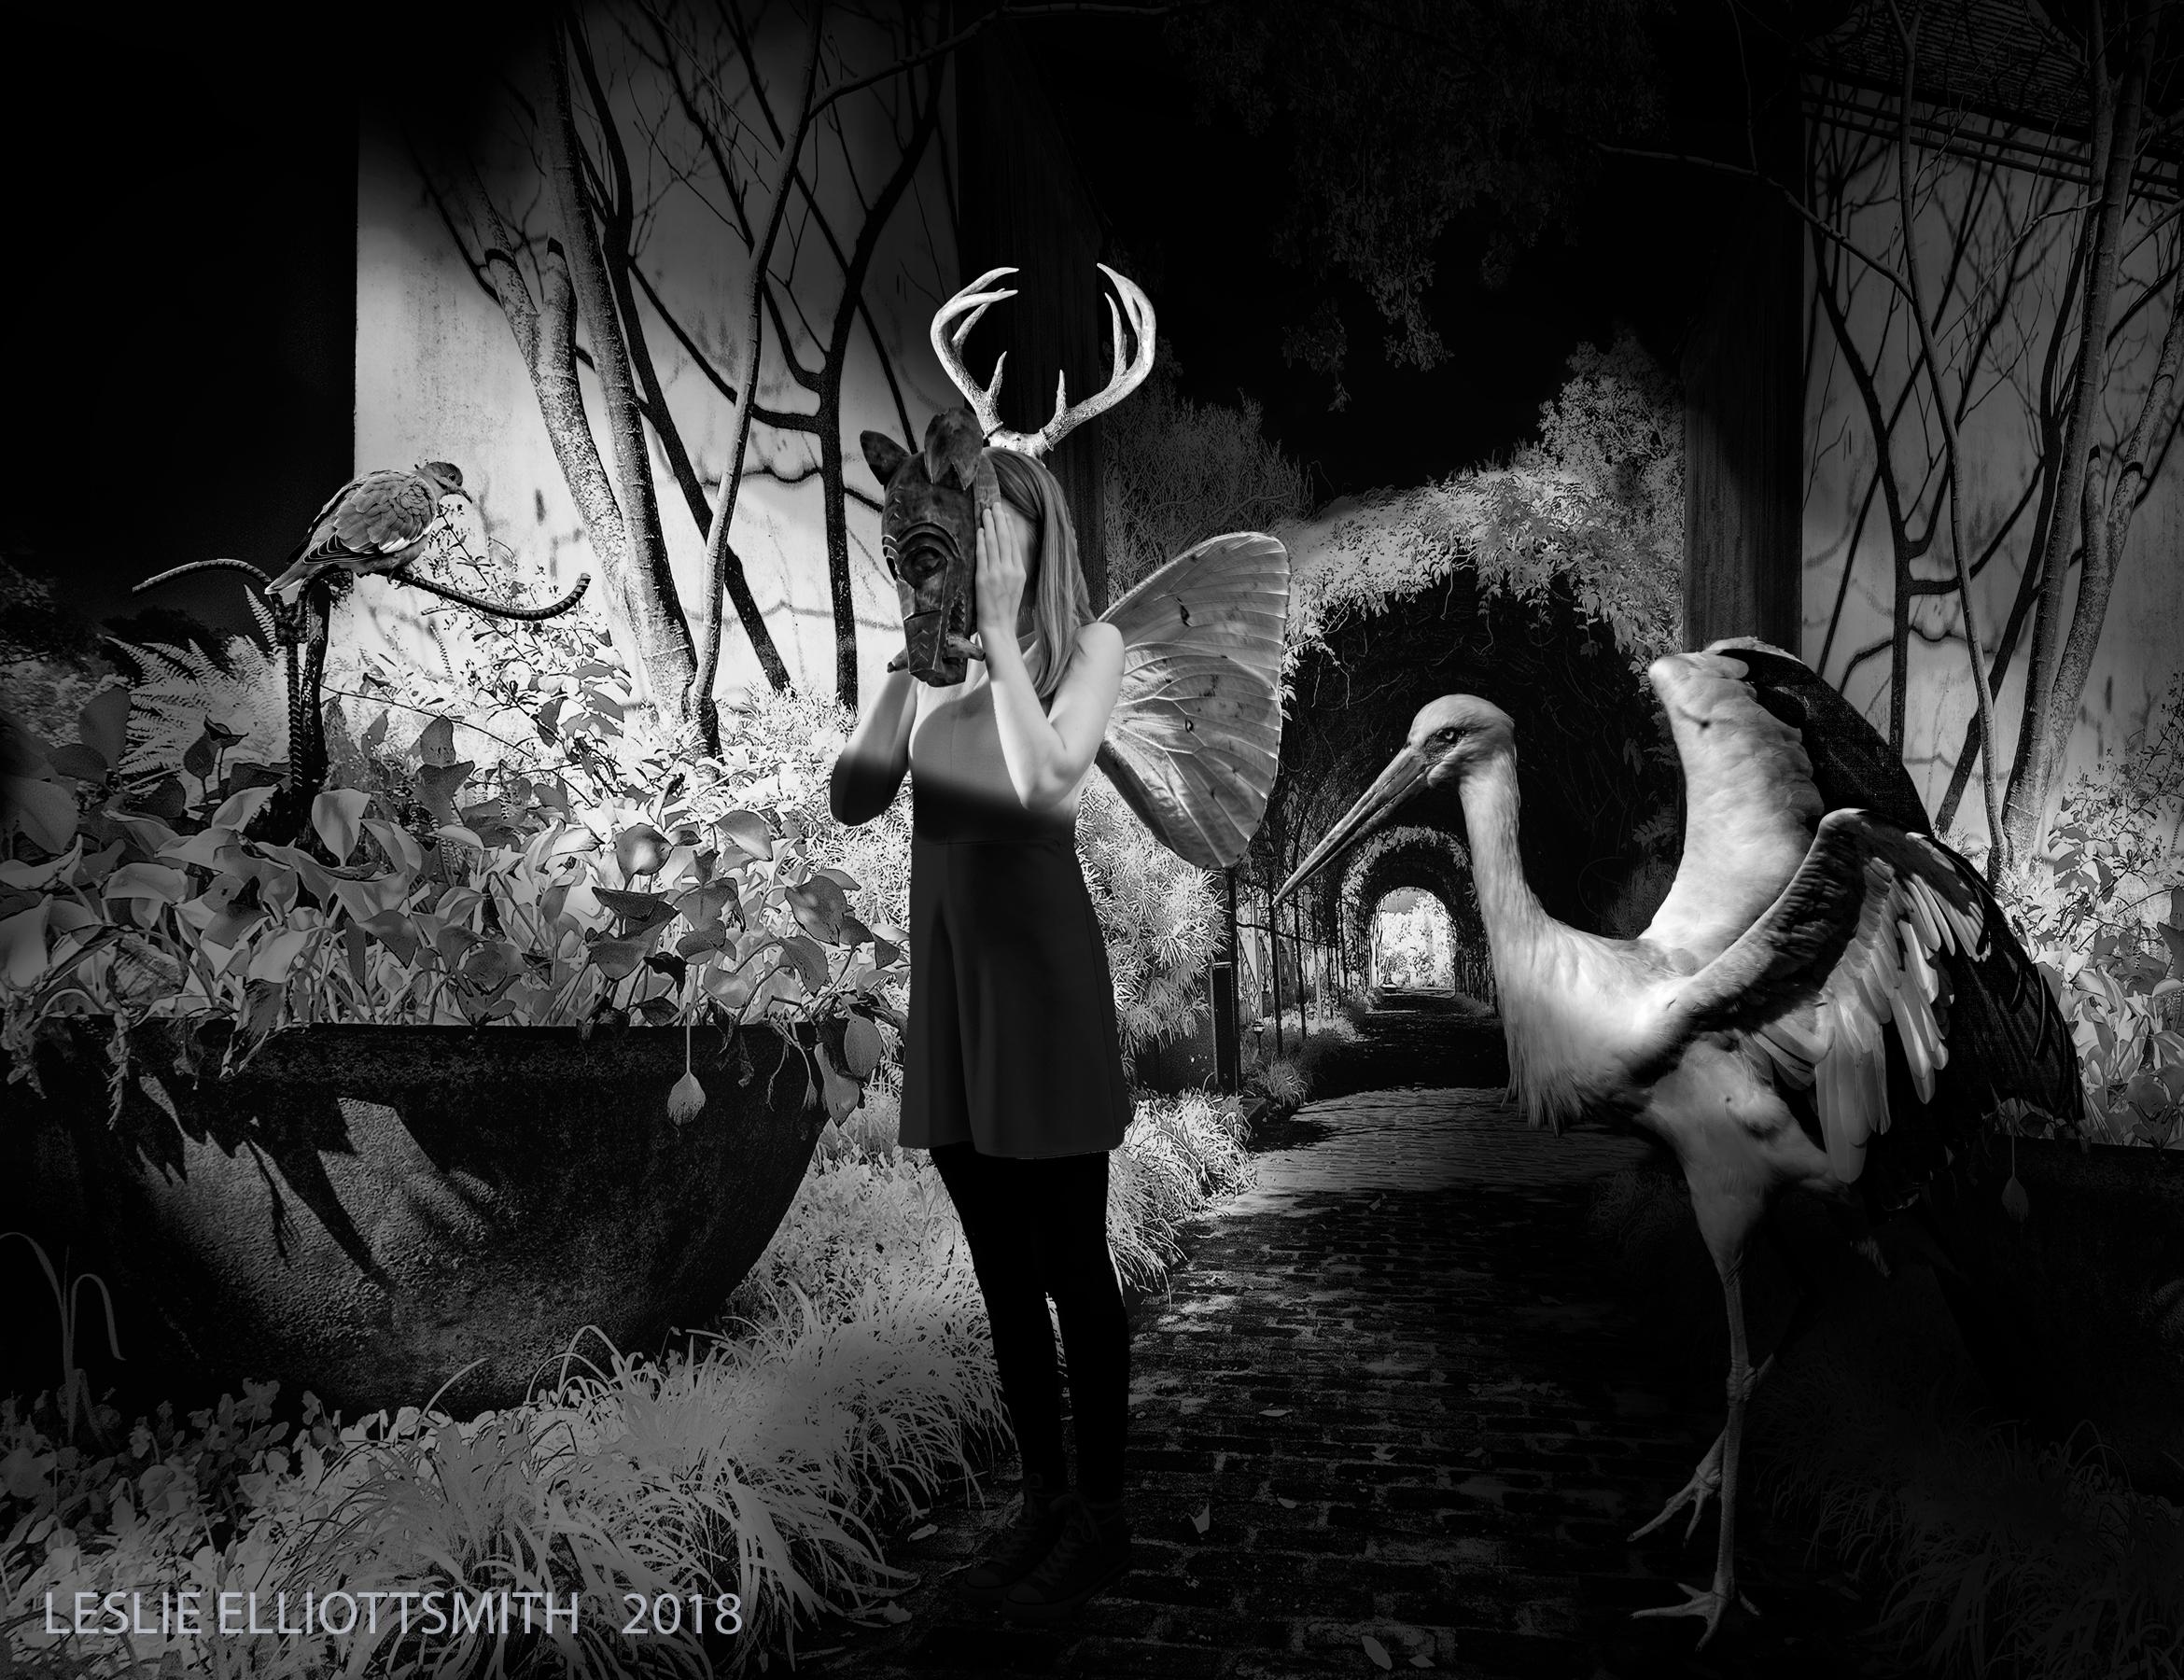 Leslie Elliottsmith Black and White Photograph – "Melas Oneiros" digital print, black and white, animals, female figure